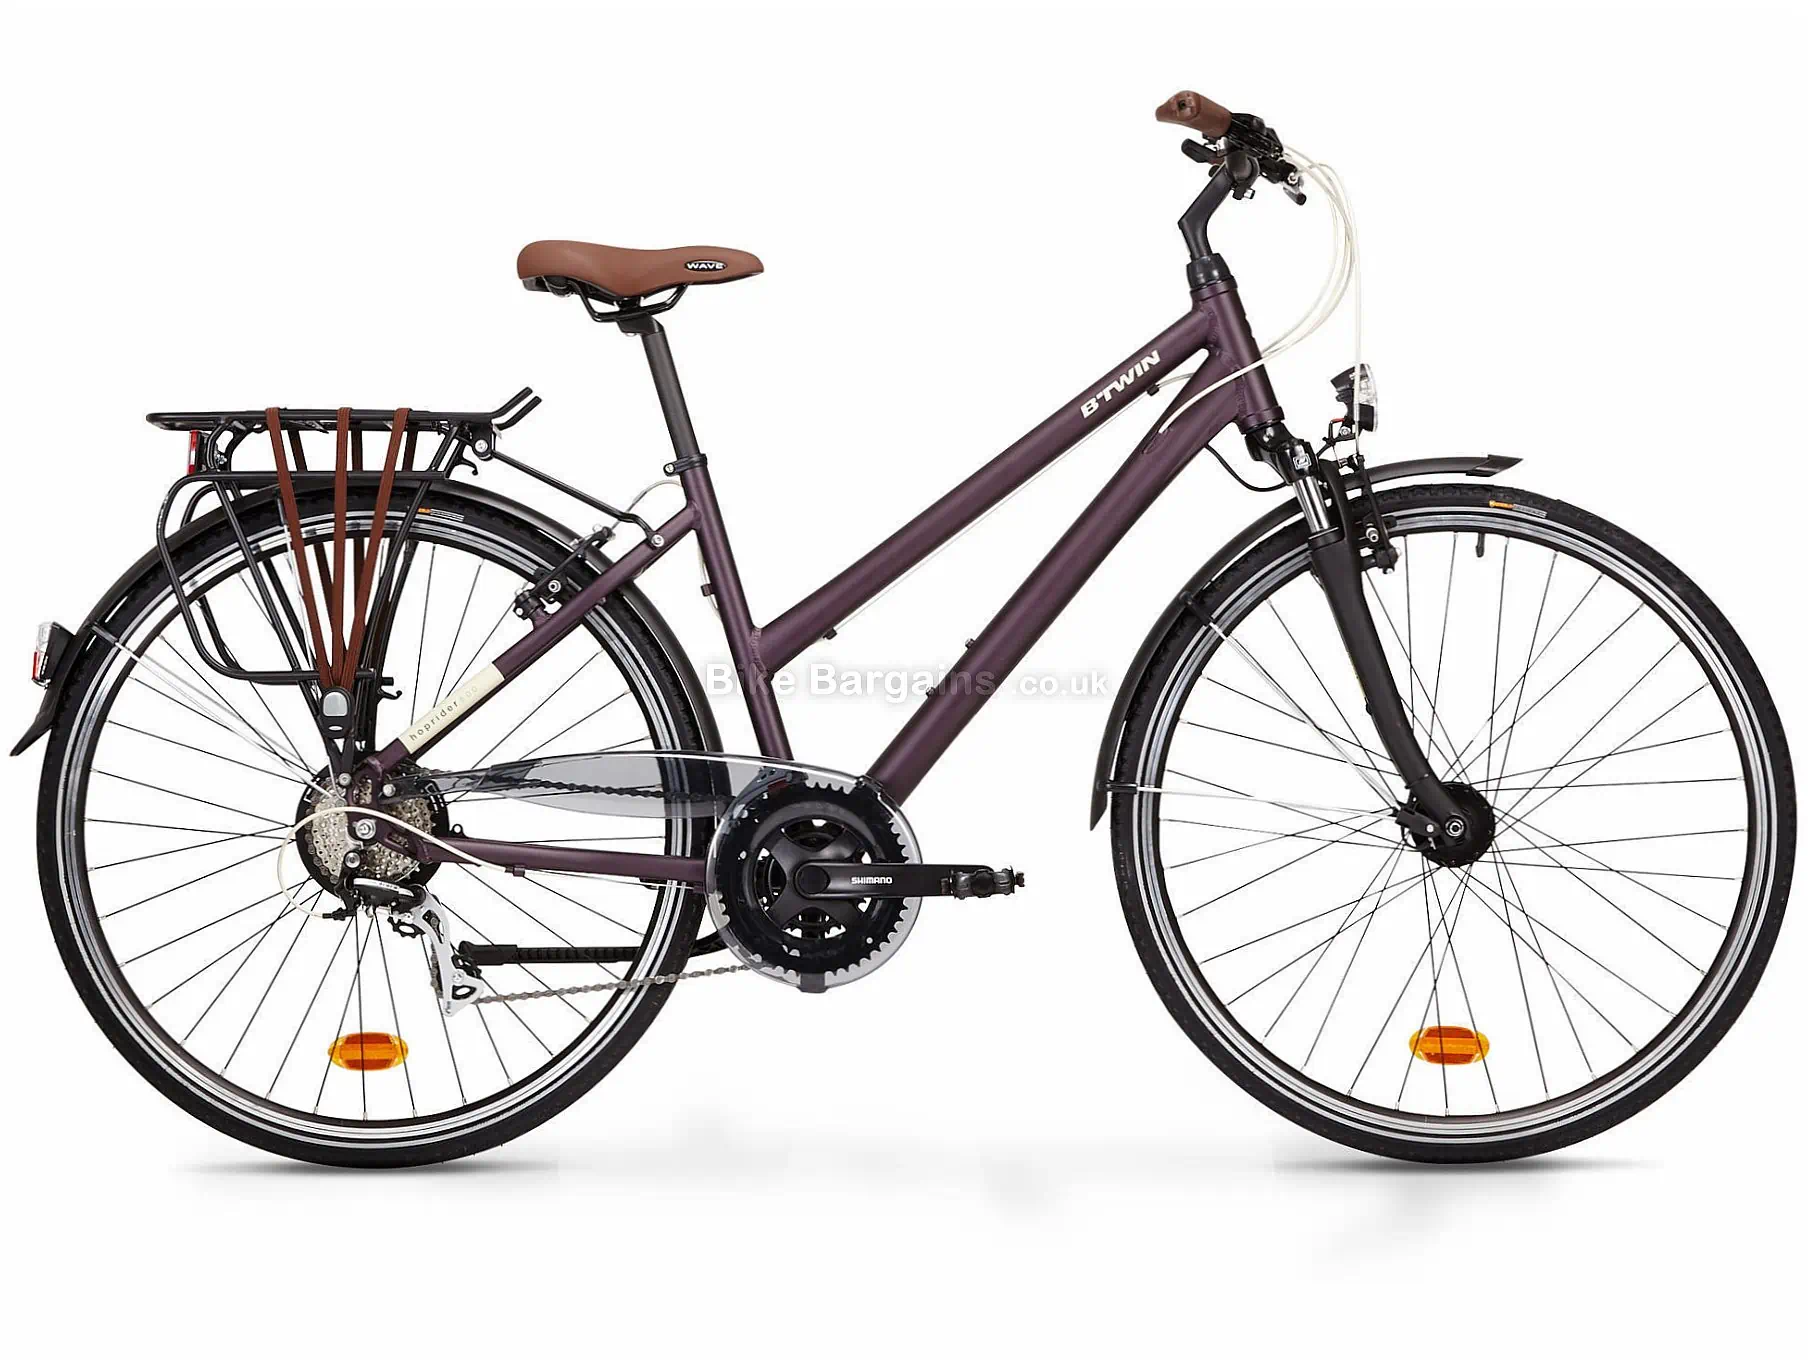 B'Twin Elops Hoprider 500 Long Distance Low Frame Ladies City Bike  (Expired)